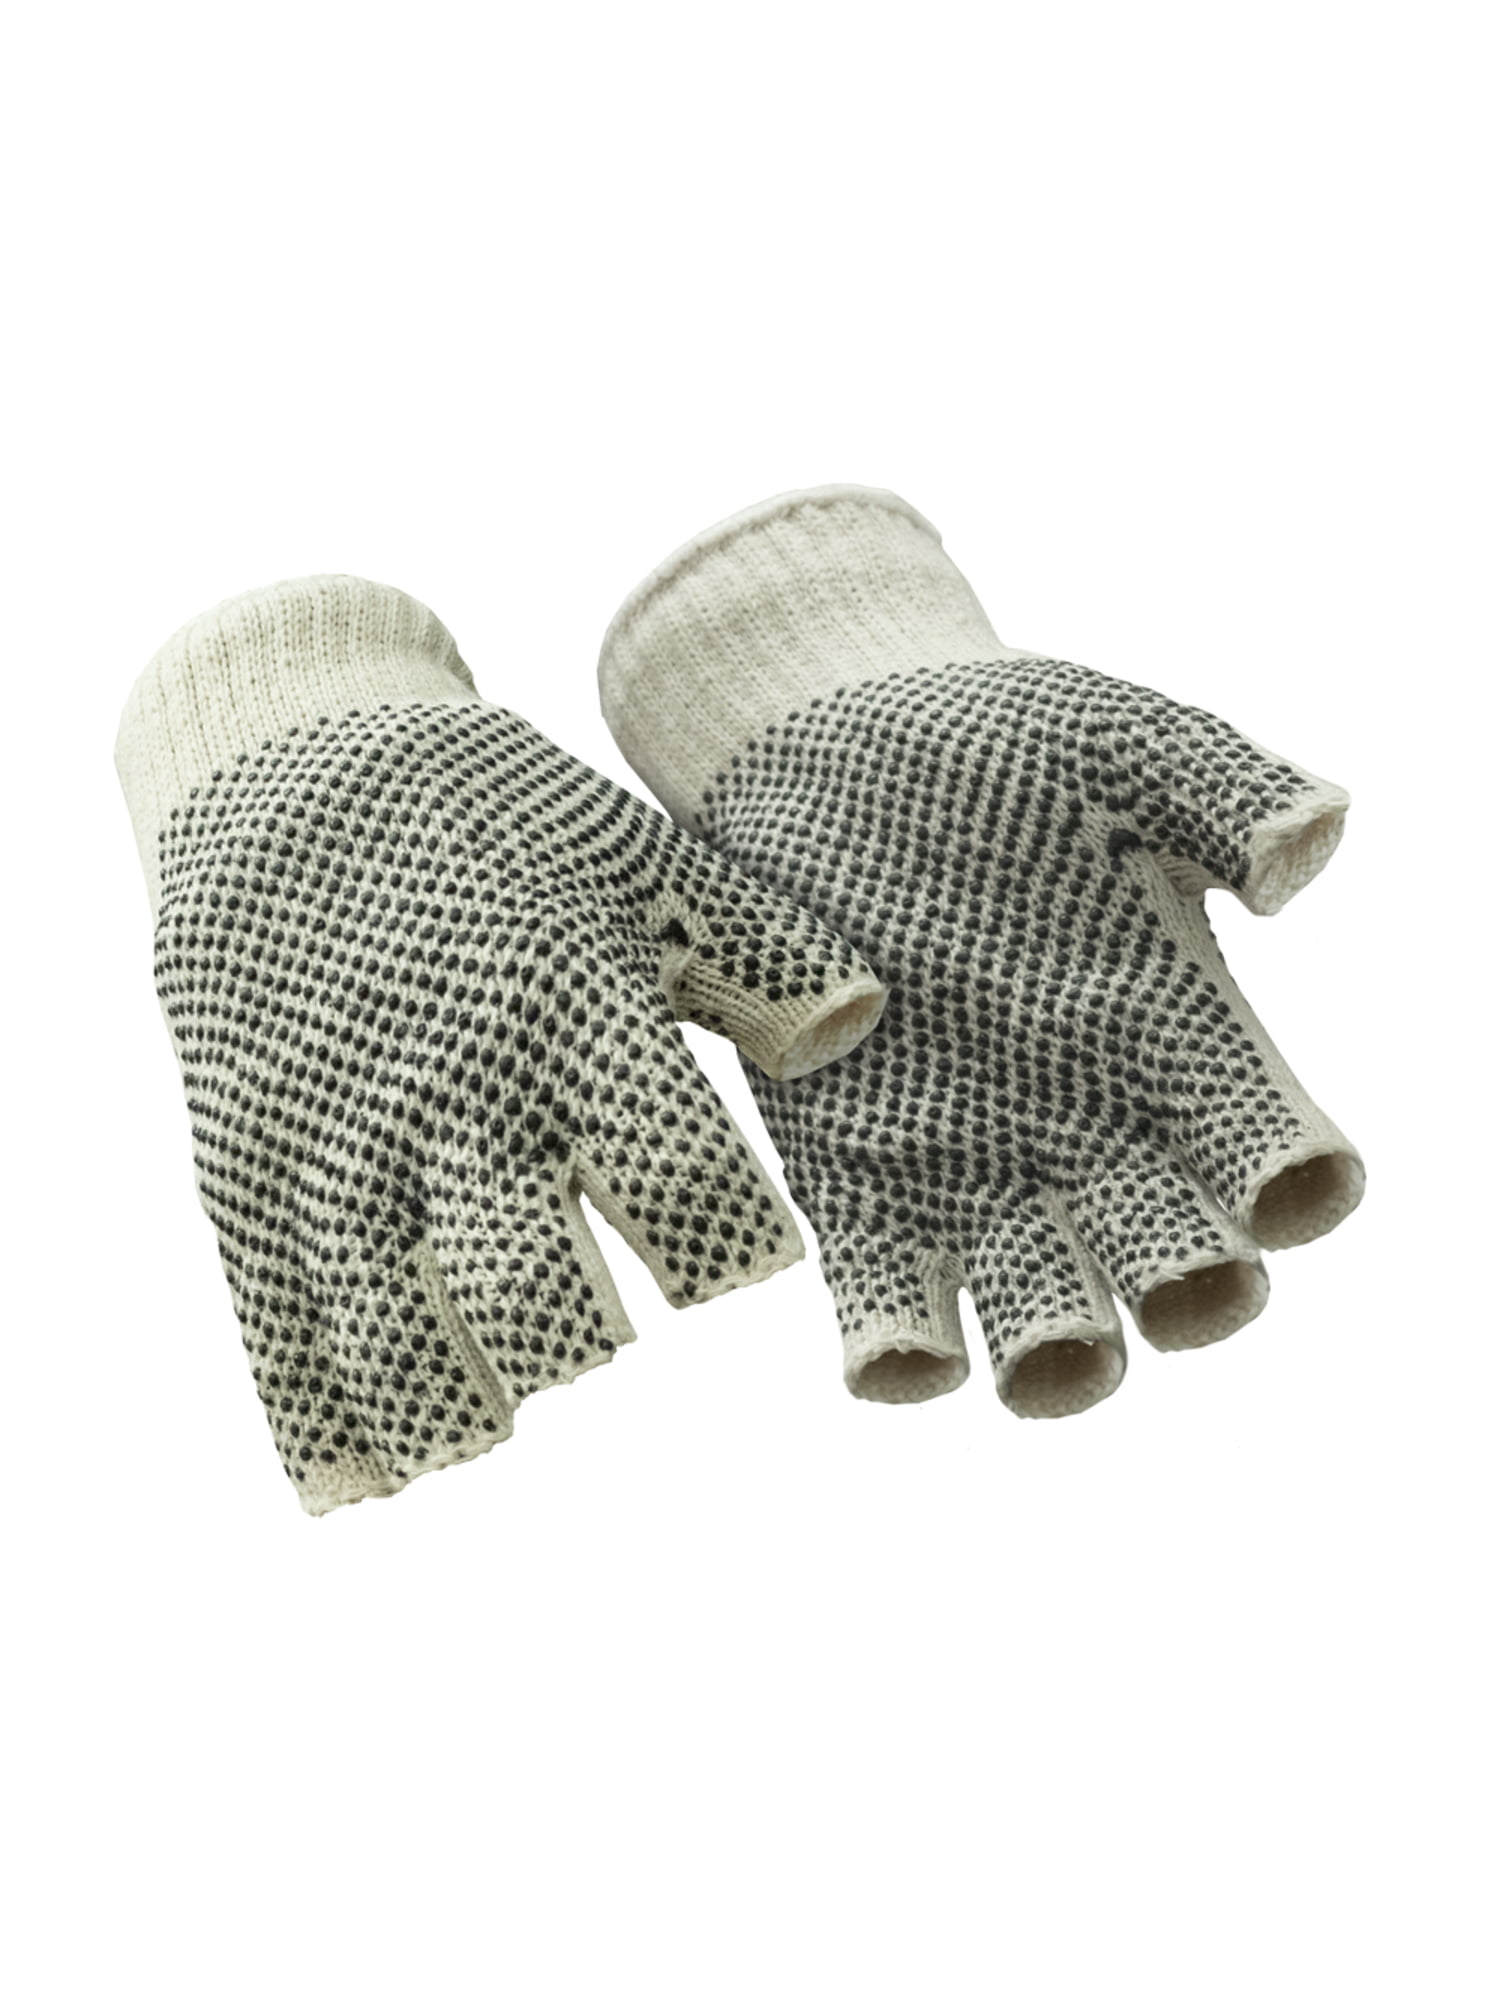 X-Large Pack of 12 RetailSource GLV1011XLx1 PVC Black Dot Knit Gloves